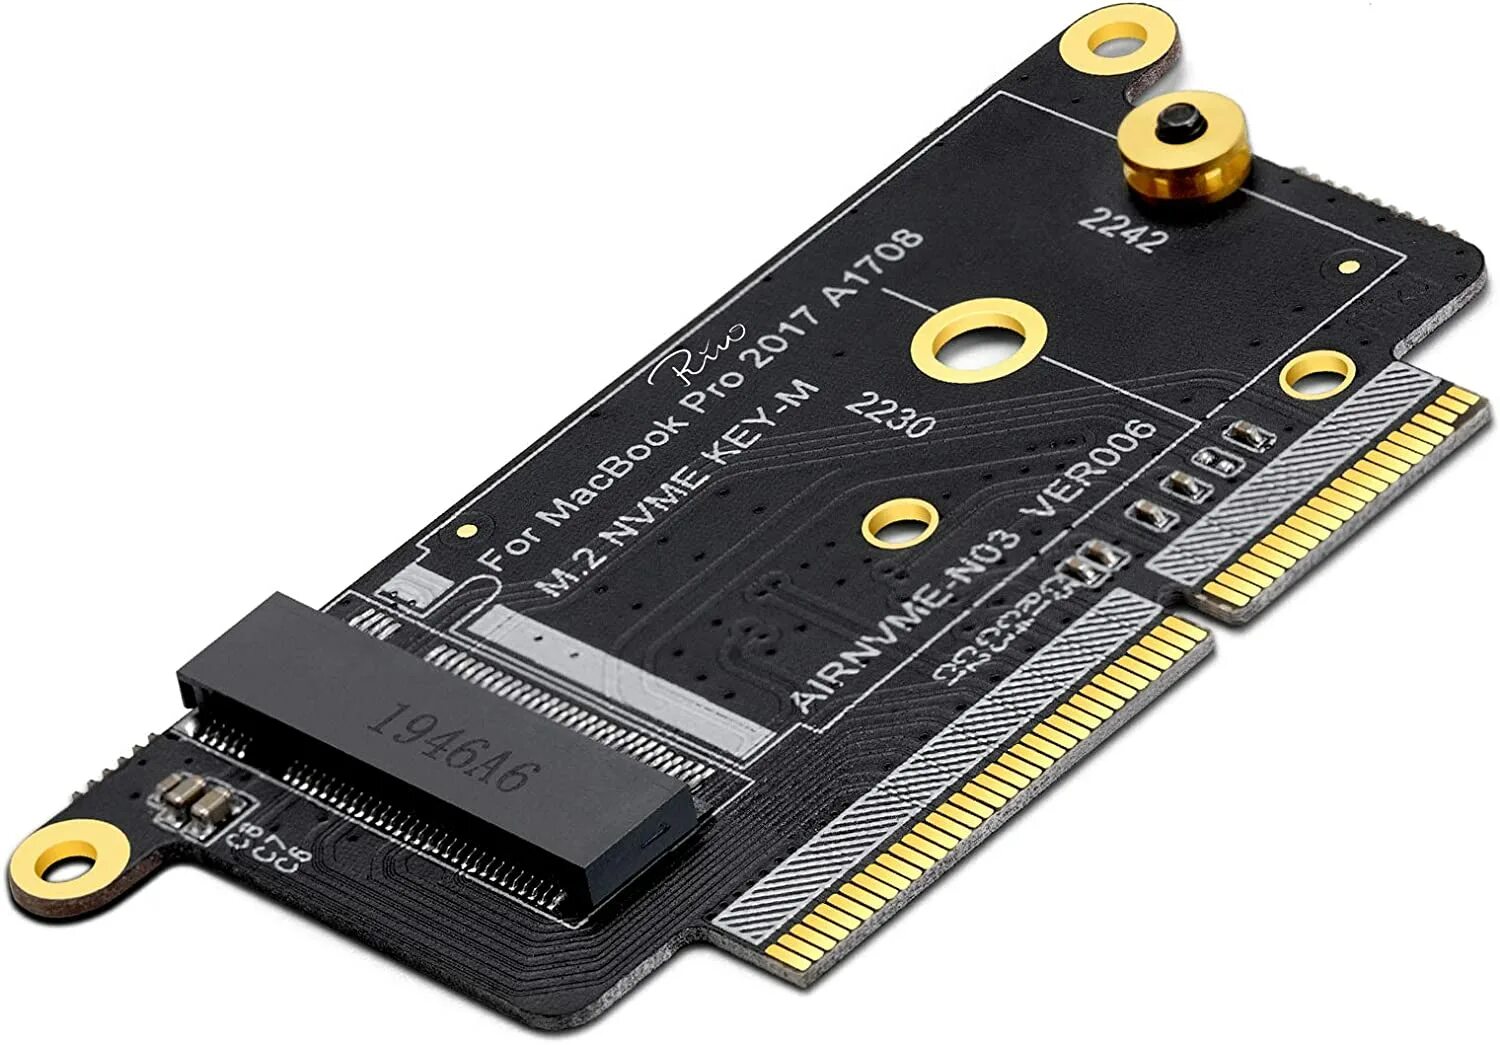 A1708 SSD. MACBOOK Pro 2017 SSD. SSD m2 в MACBOOK Pro 2016. NVME М.2 твердотельный накопитель NGFF для 2017 2016 Pro a1708 SSD Adapter адаптер. M 2 2242 купить